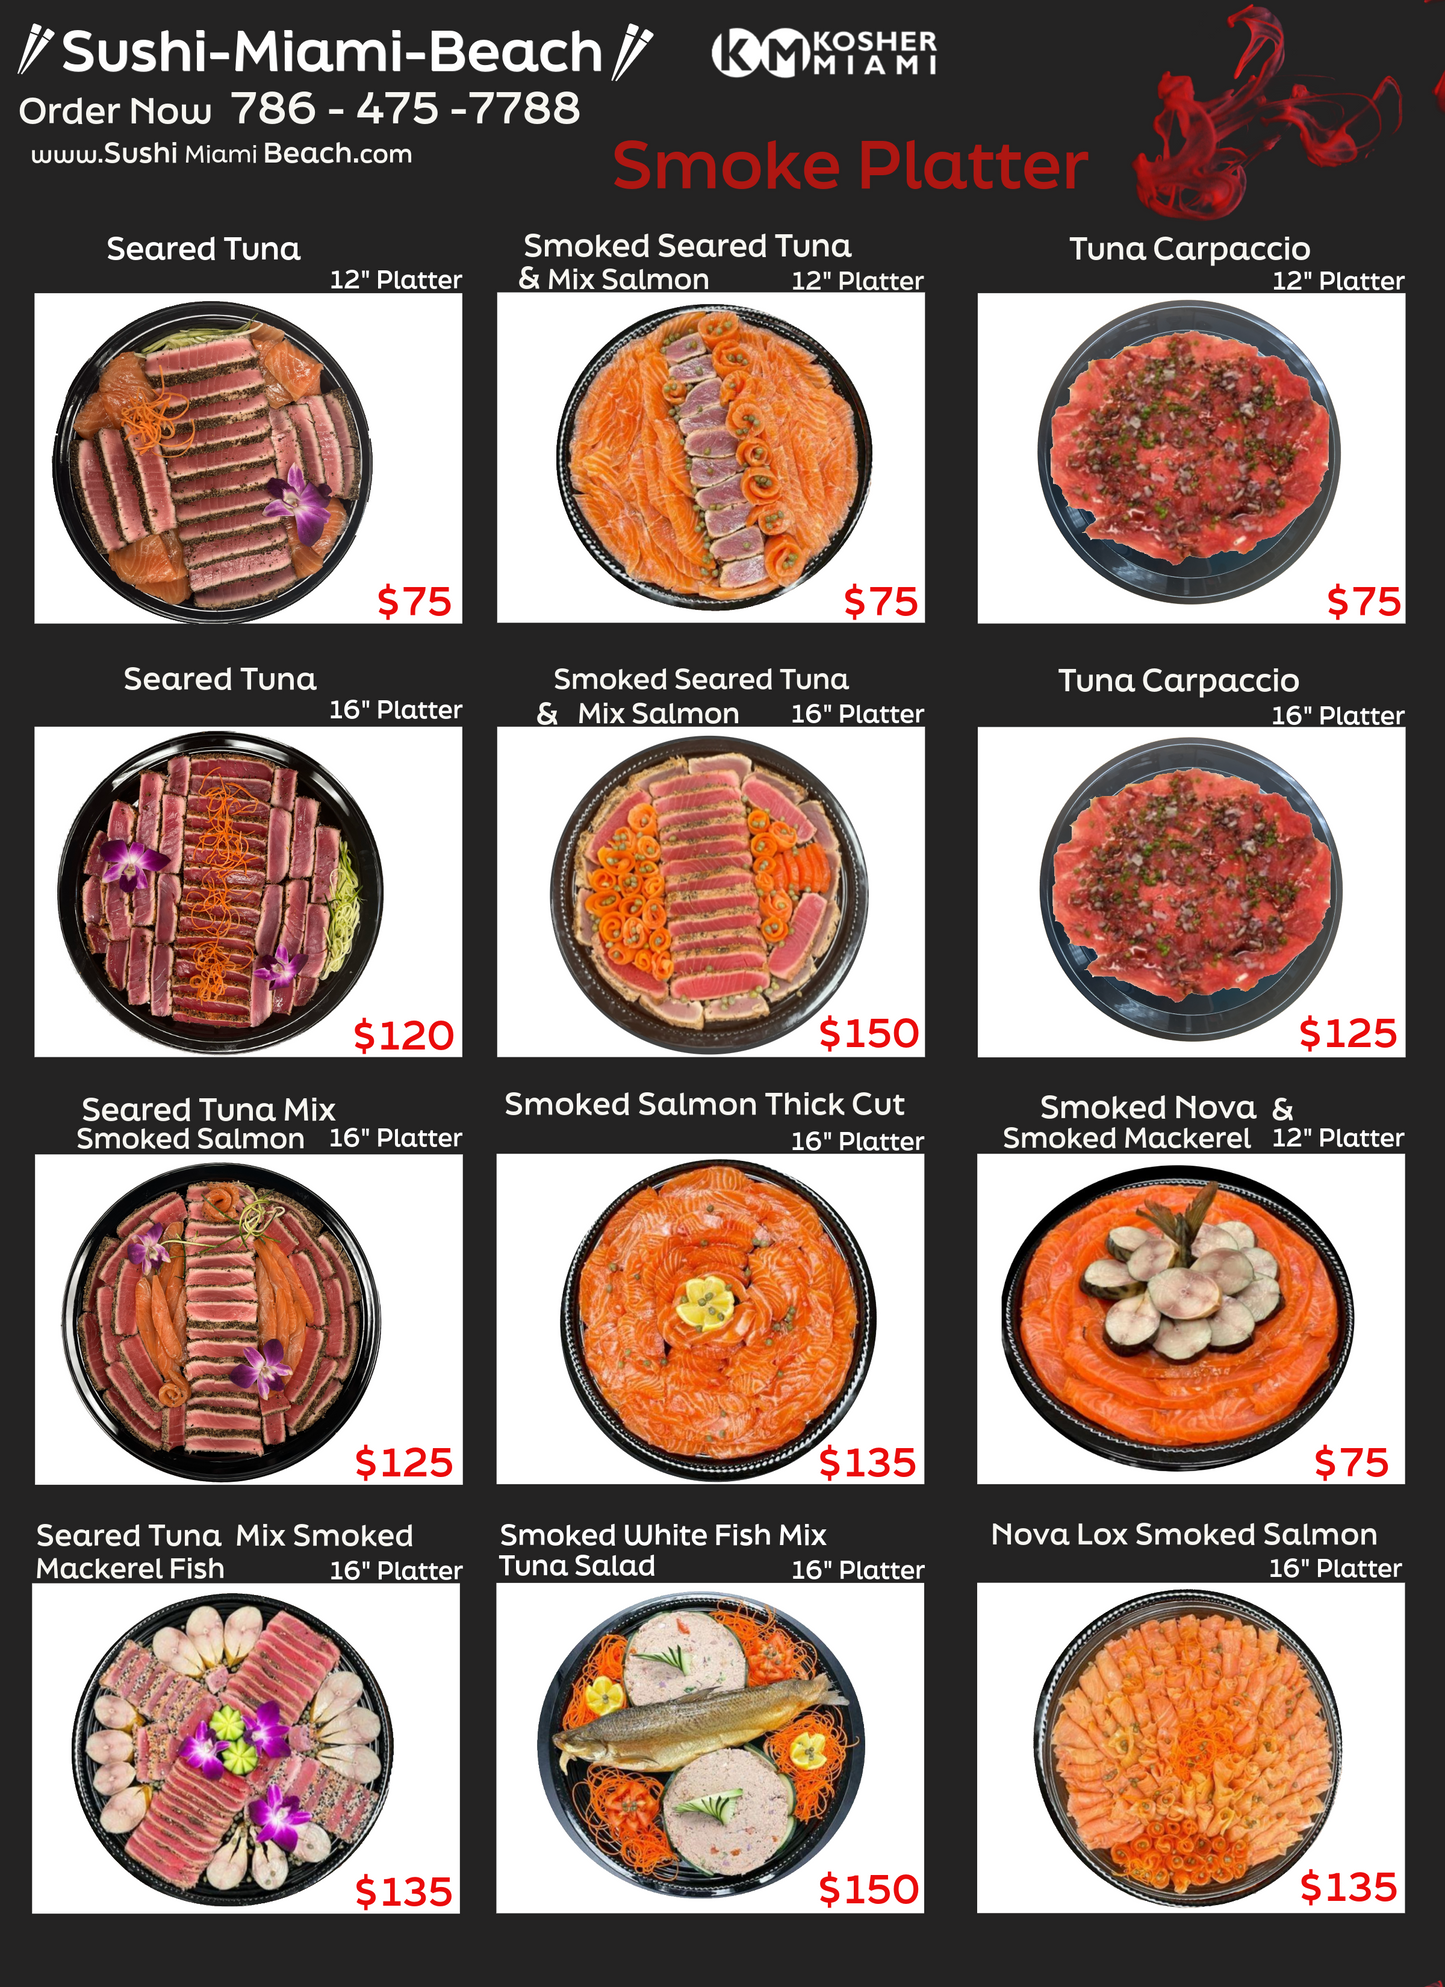 Tuna Carpaccio Platters 12" - 16"